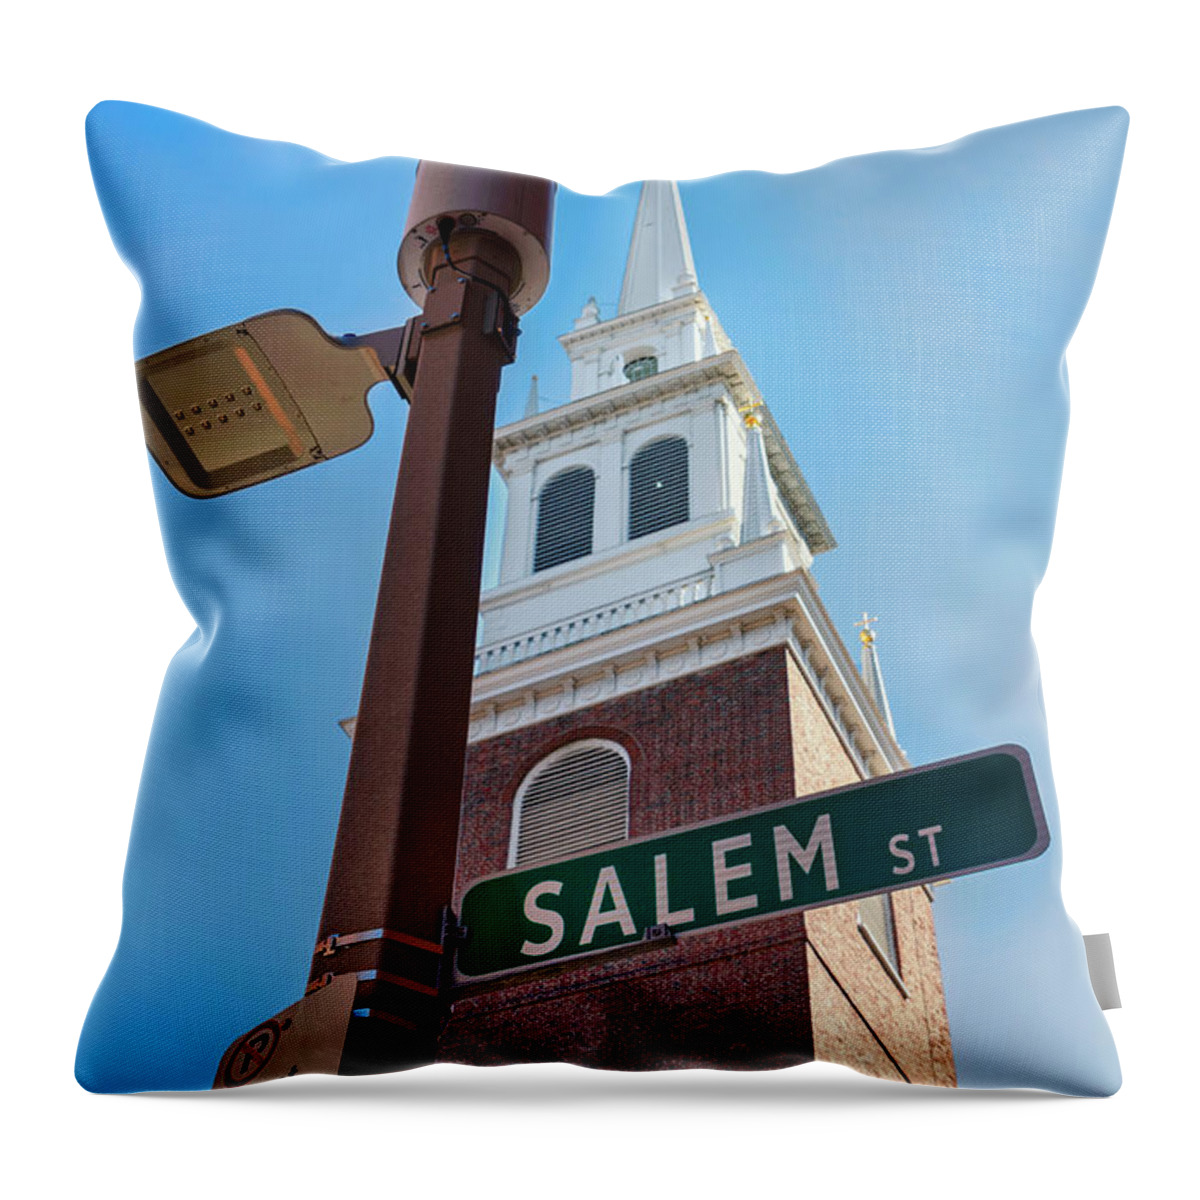 Estock Throw Pillow featuring the digital art Old North Church, Boston, Ma by Laura Zeid